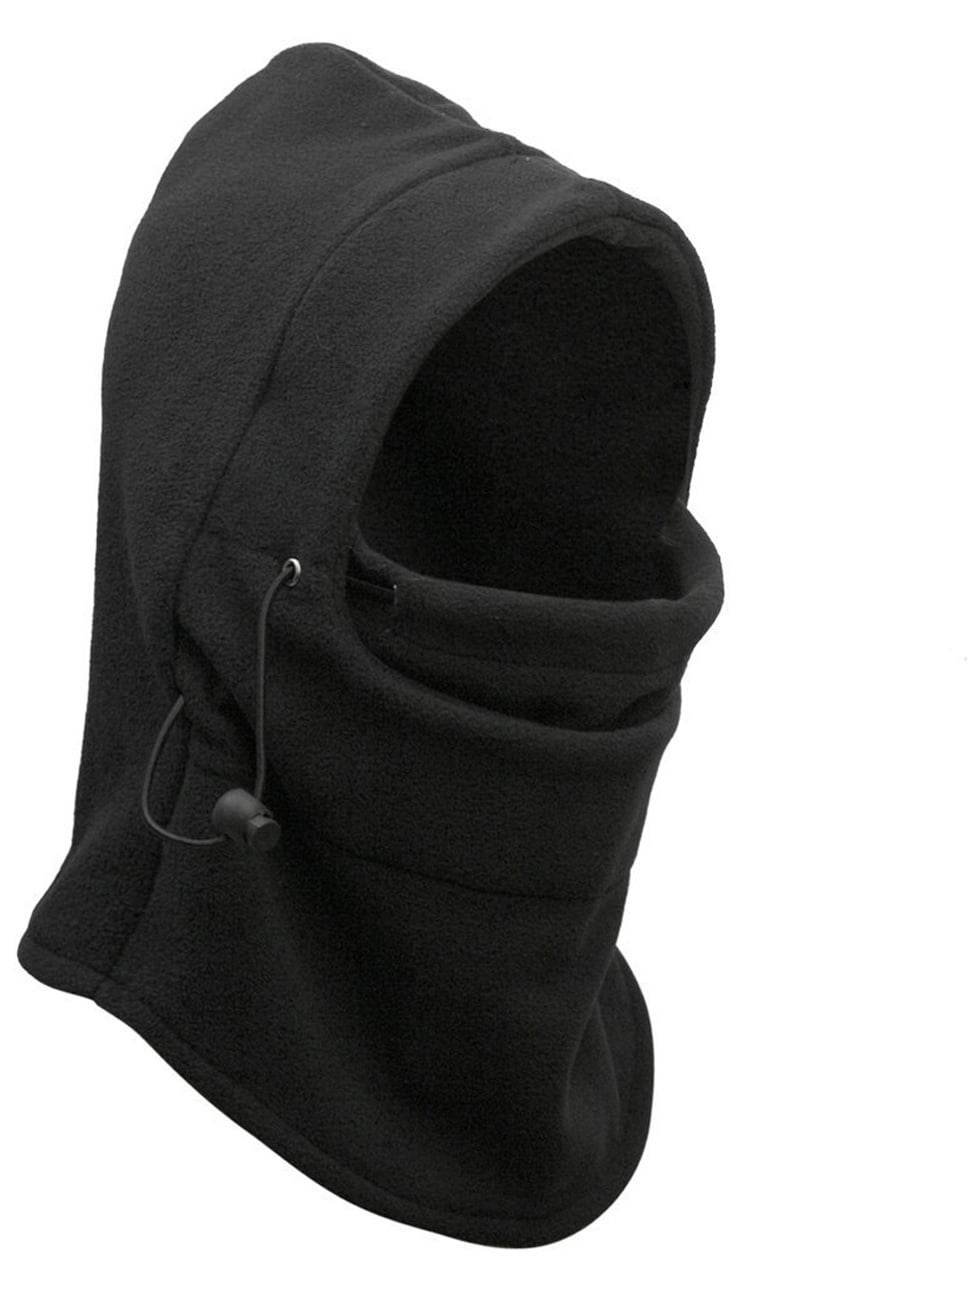 Multi-purpose Windproof Thermal Fleece Balaclava Full Face Cover Cap Neck Best 